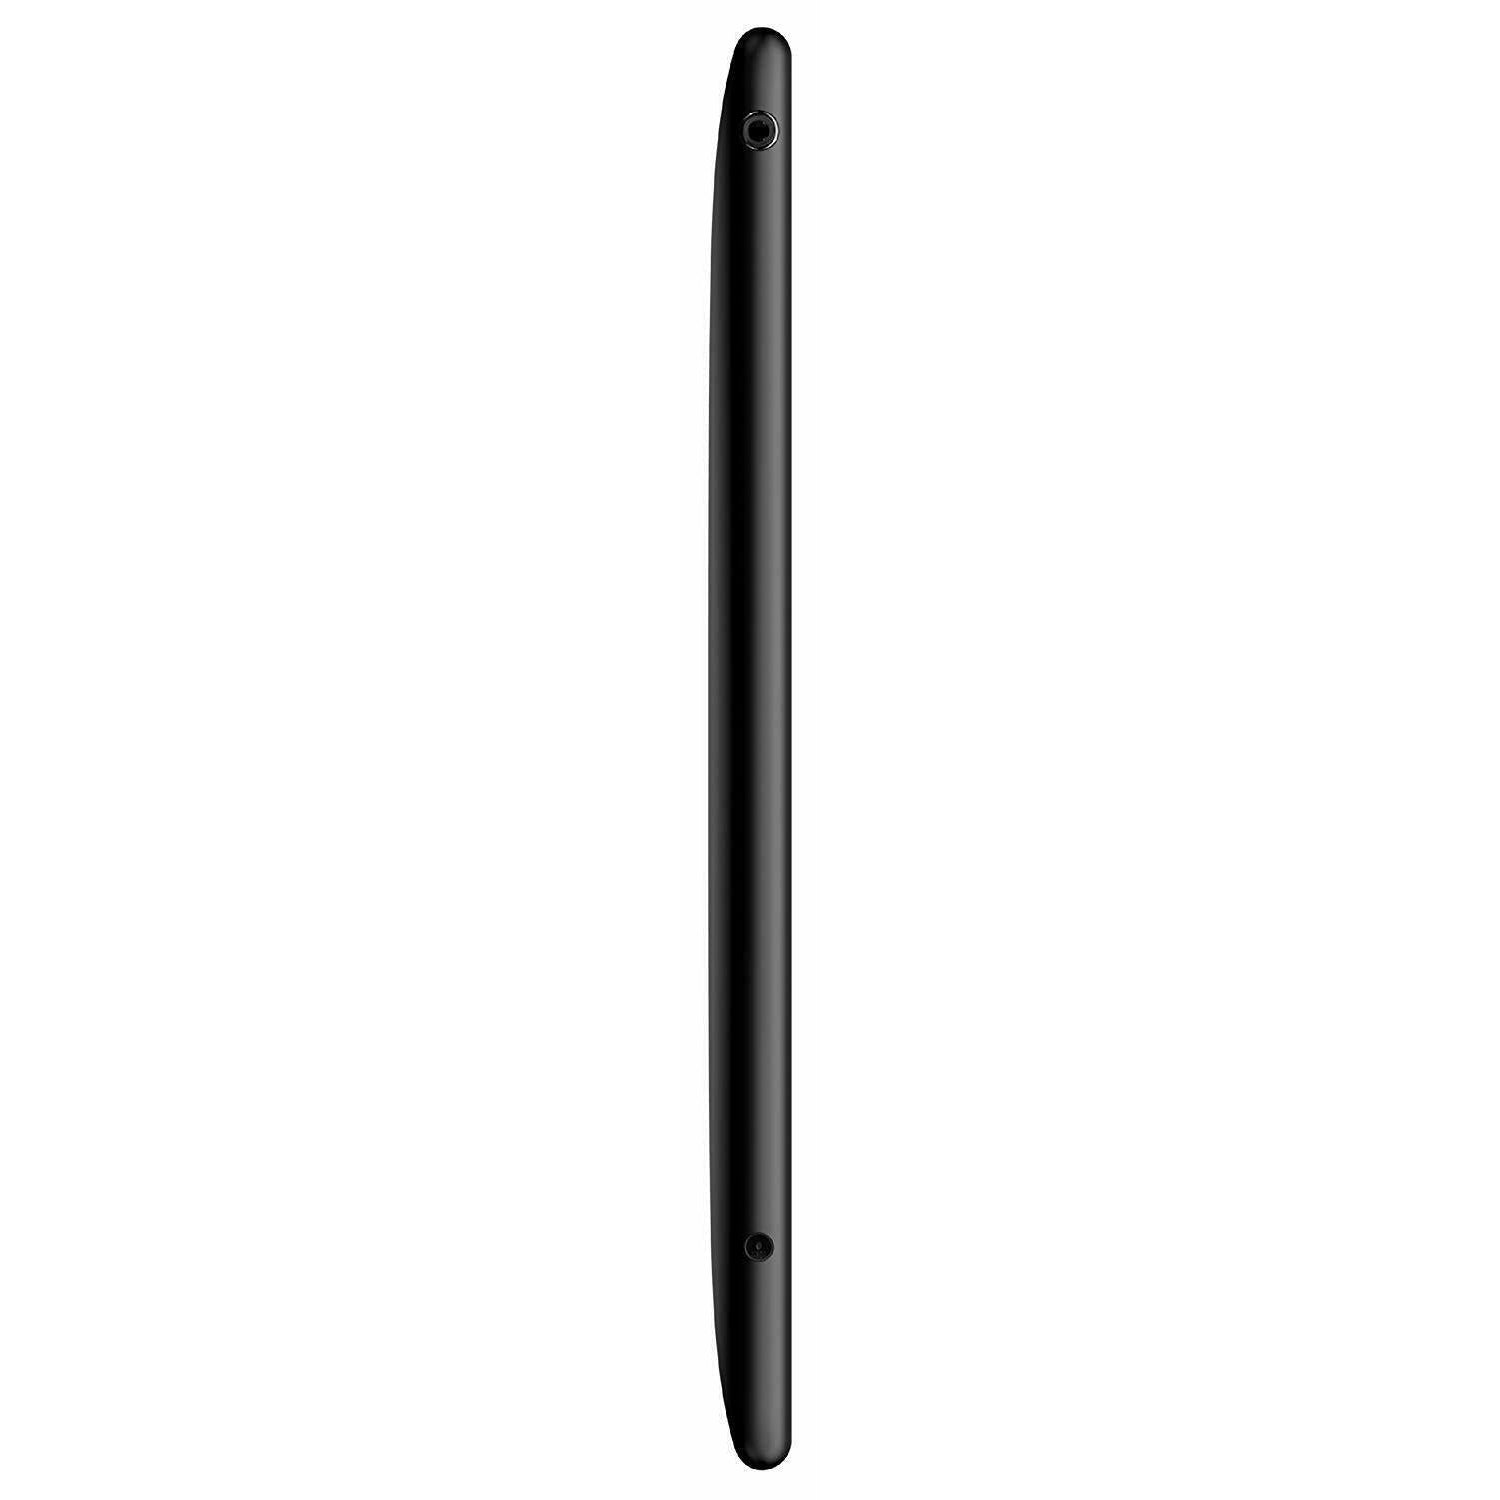 Nokia Lumia 2520 Tablet RX-113 10.1" 2GBRAM 32GB WIN 8.1RT TOUCHSCREEN (634848)